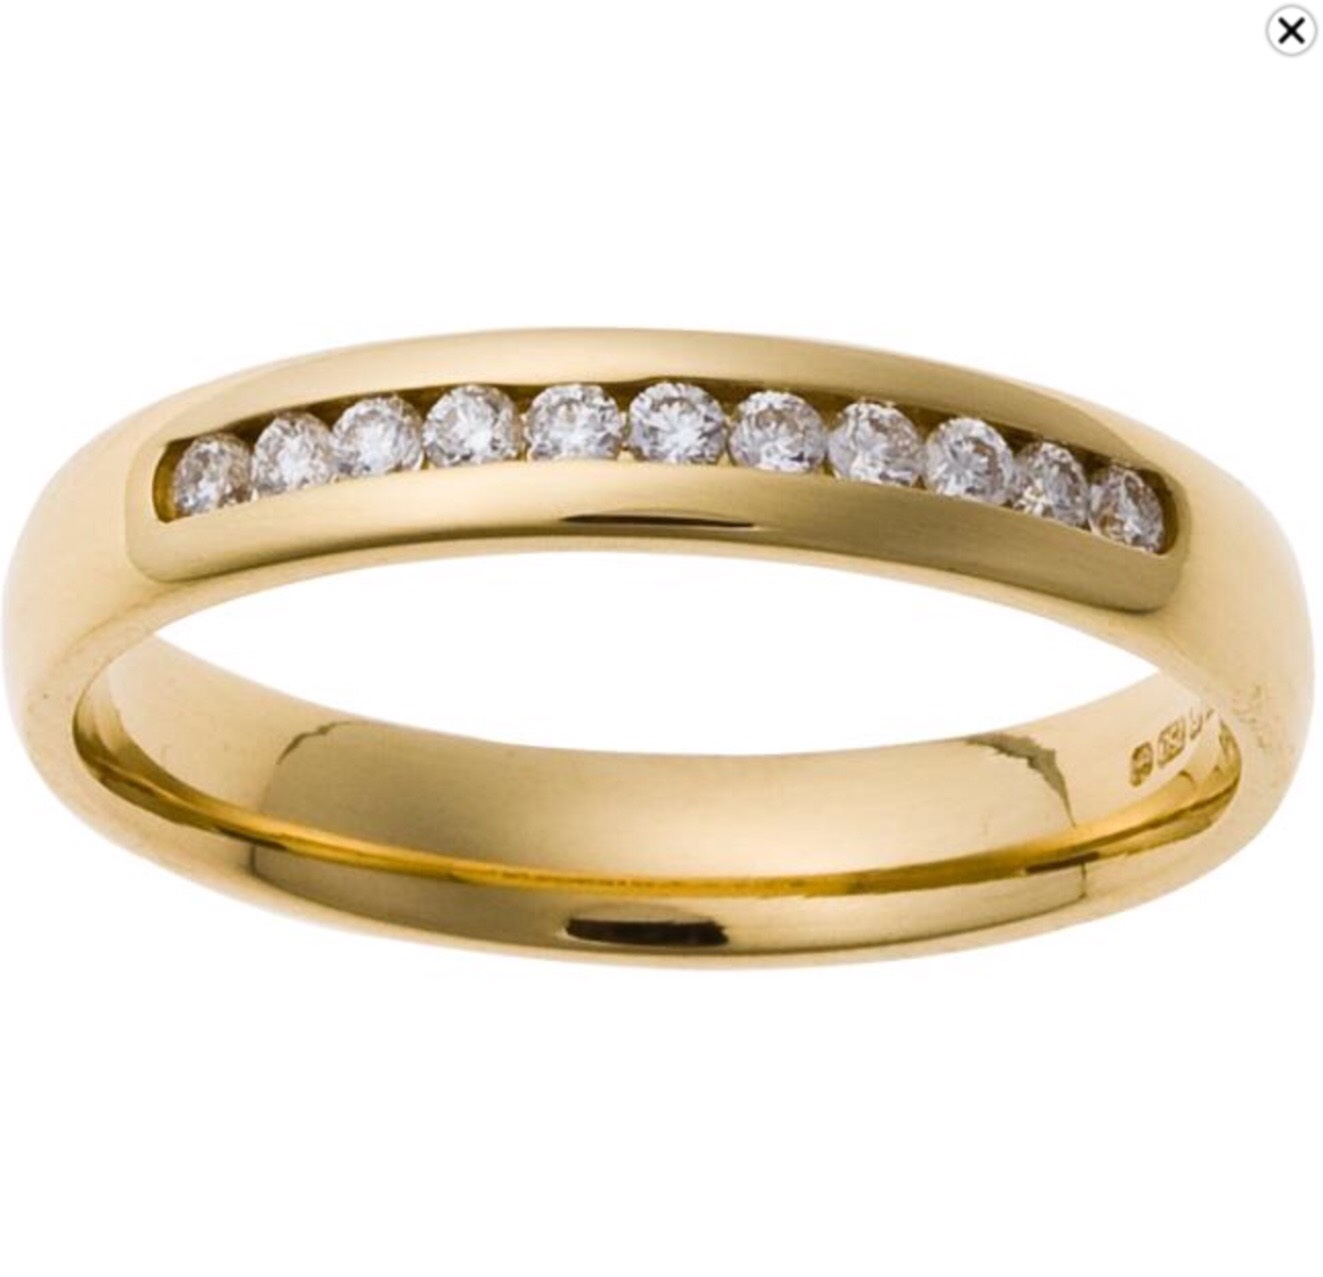 Lady’s Wedding Ring Pattern 200 Set with 11 Diamonds - John Rattigan ...